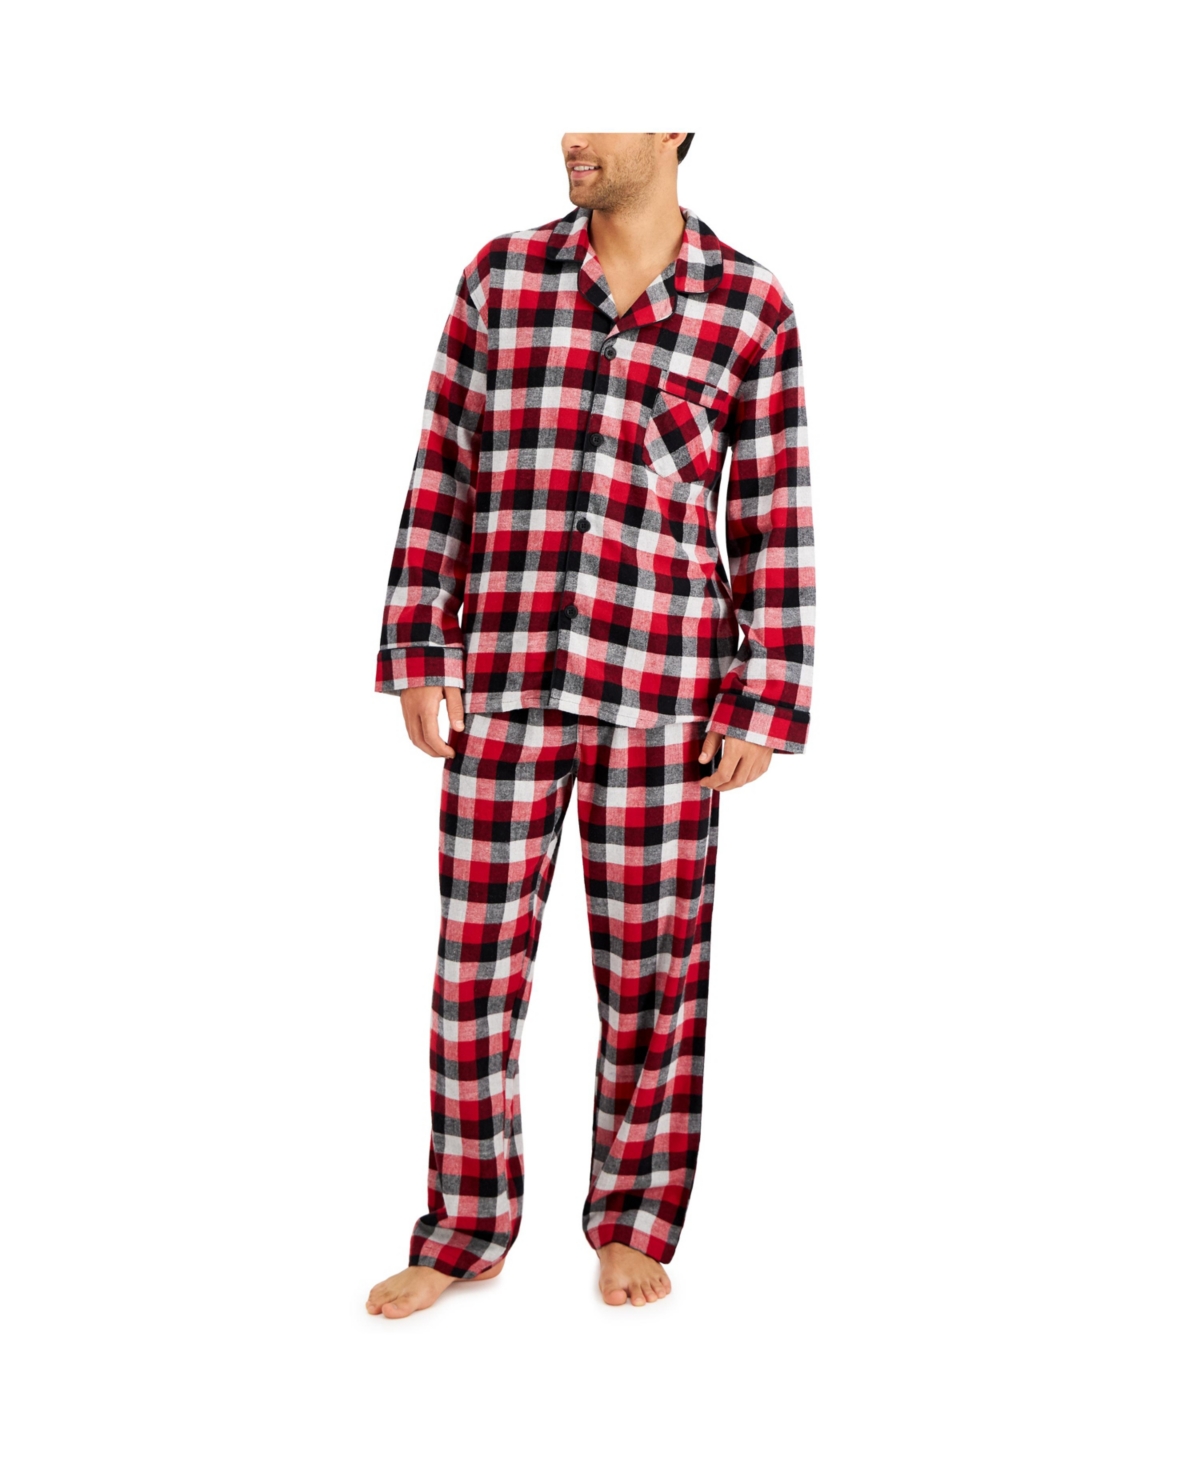 Men's Flannel Plaid Pajama Set - Navy, Black, and White